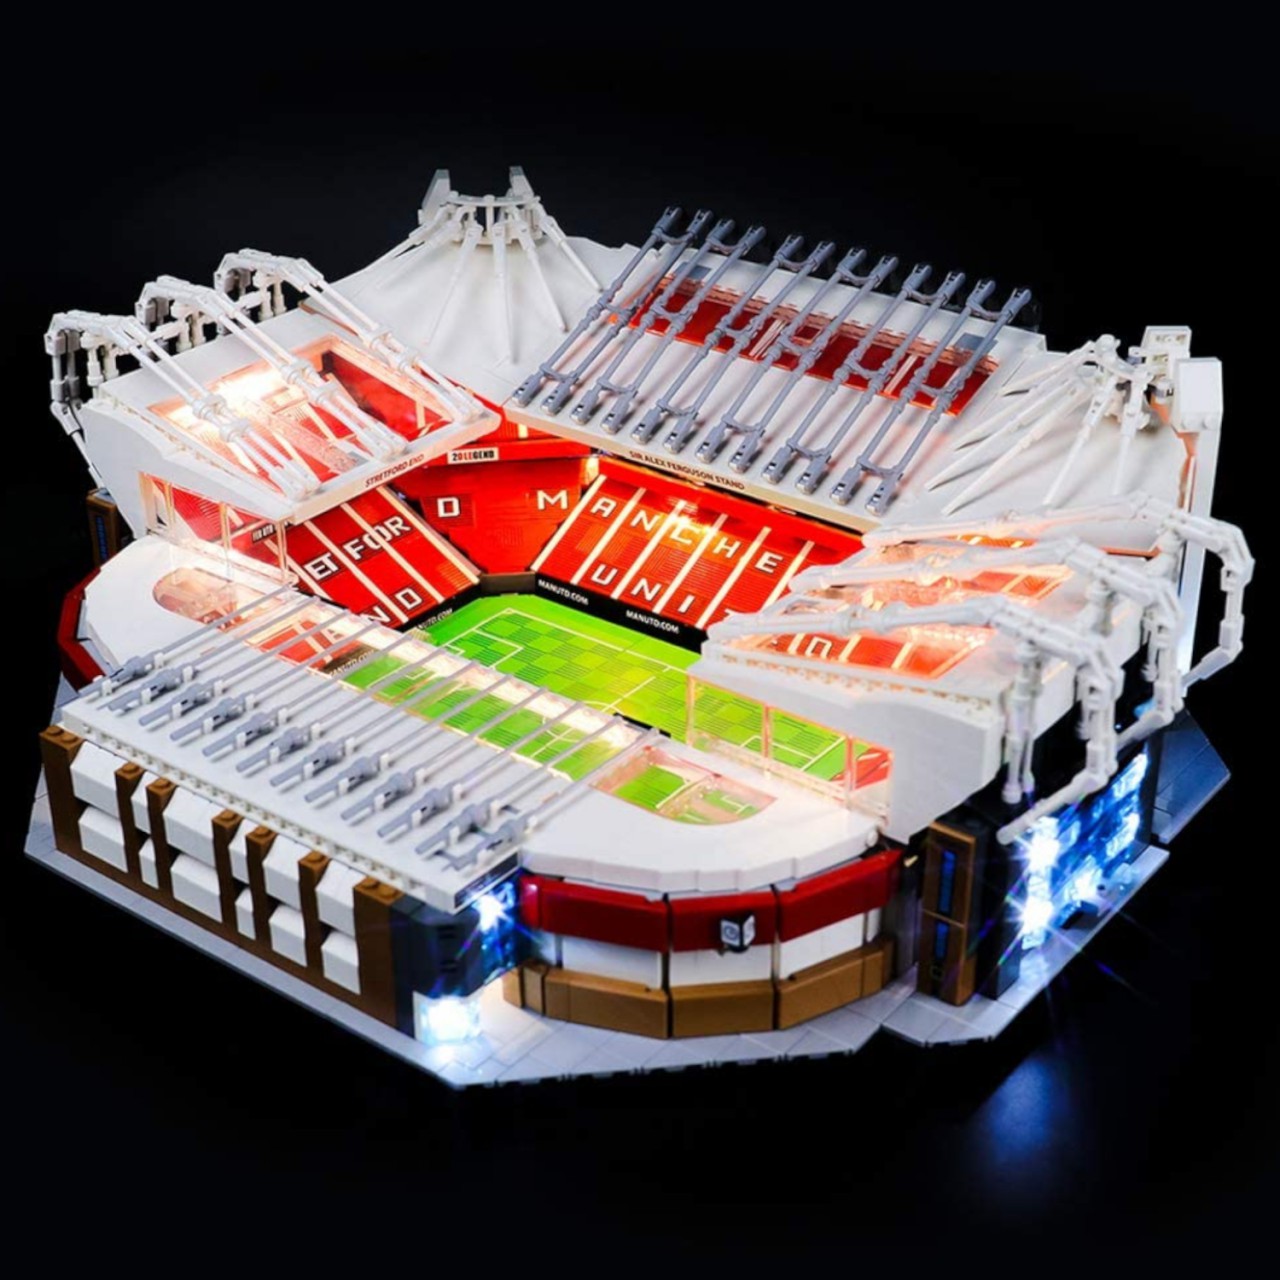 Lego Creator Expert 10272 Old Trafford - Manchester United